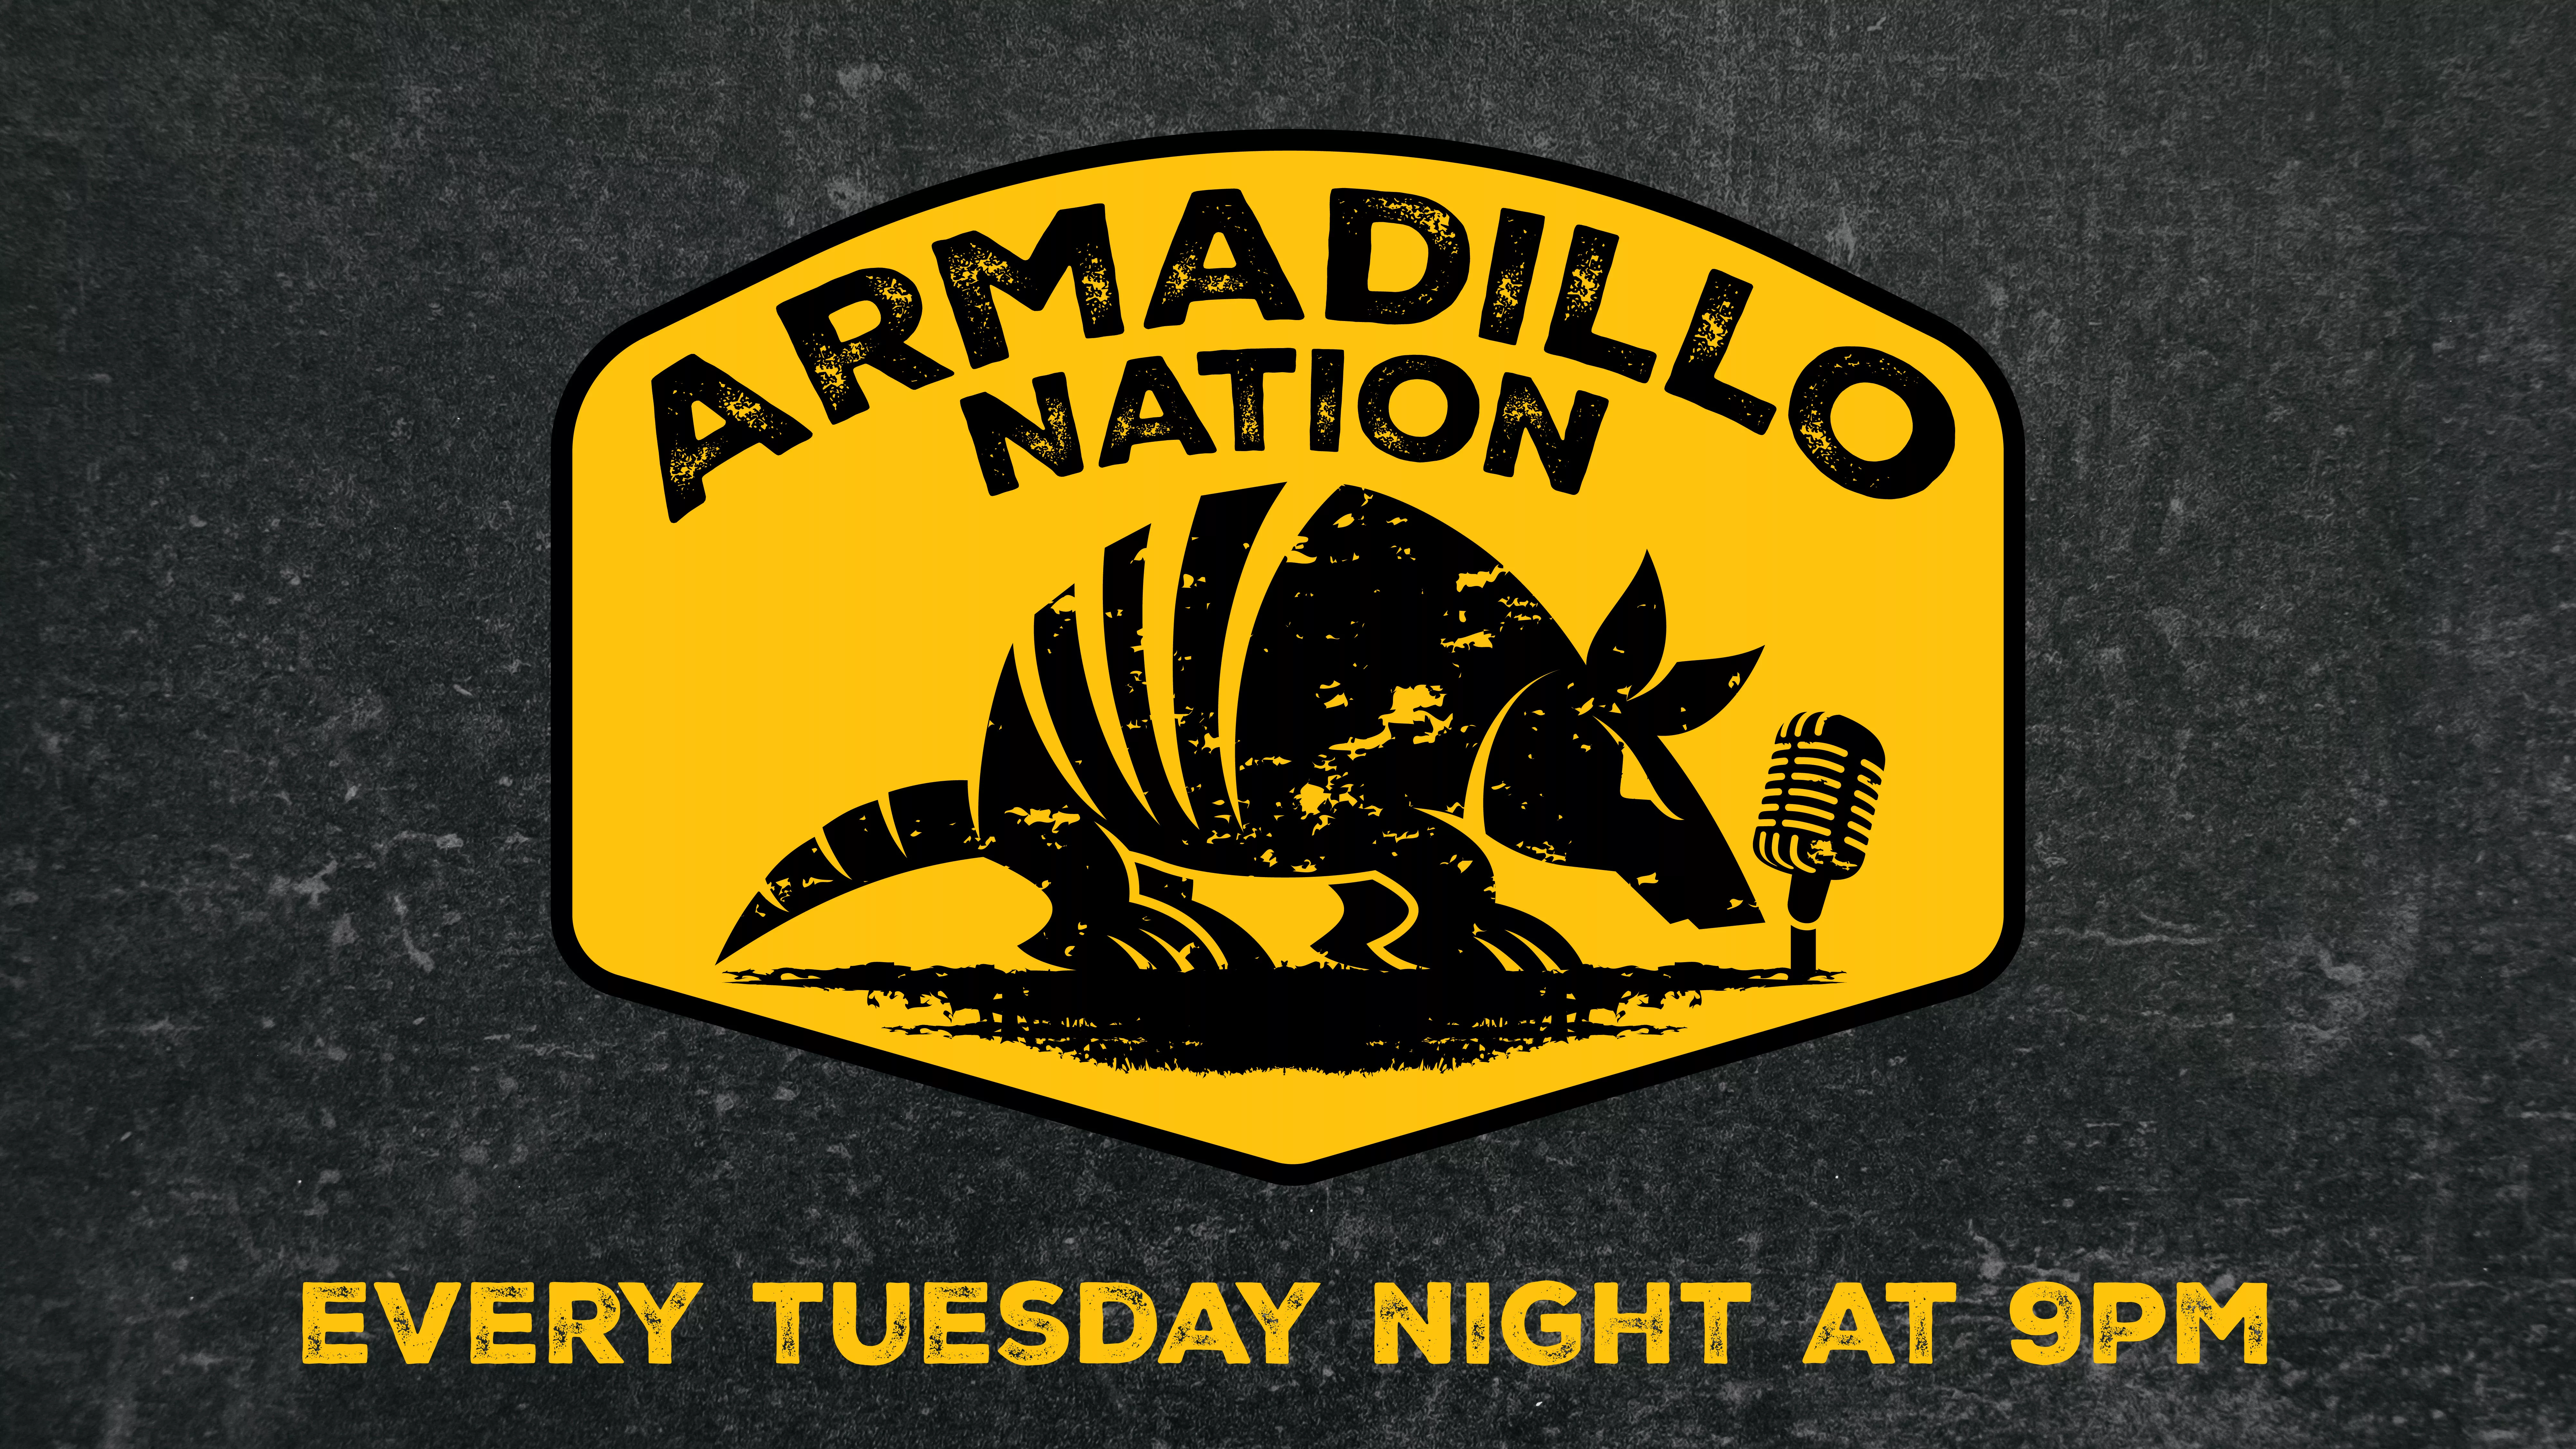 Armadillo Nation on KLBJFM Austin 93.7 Tuesdays at 9pm